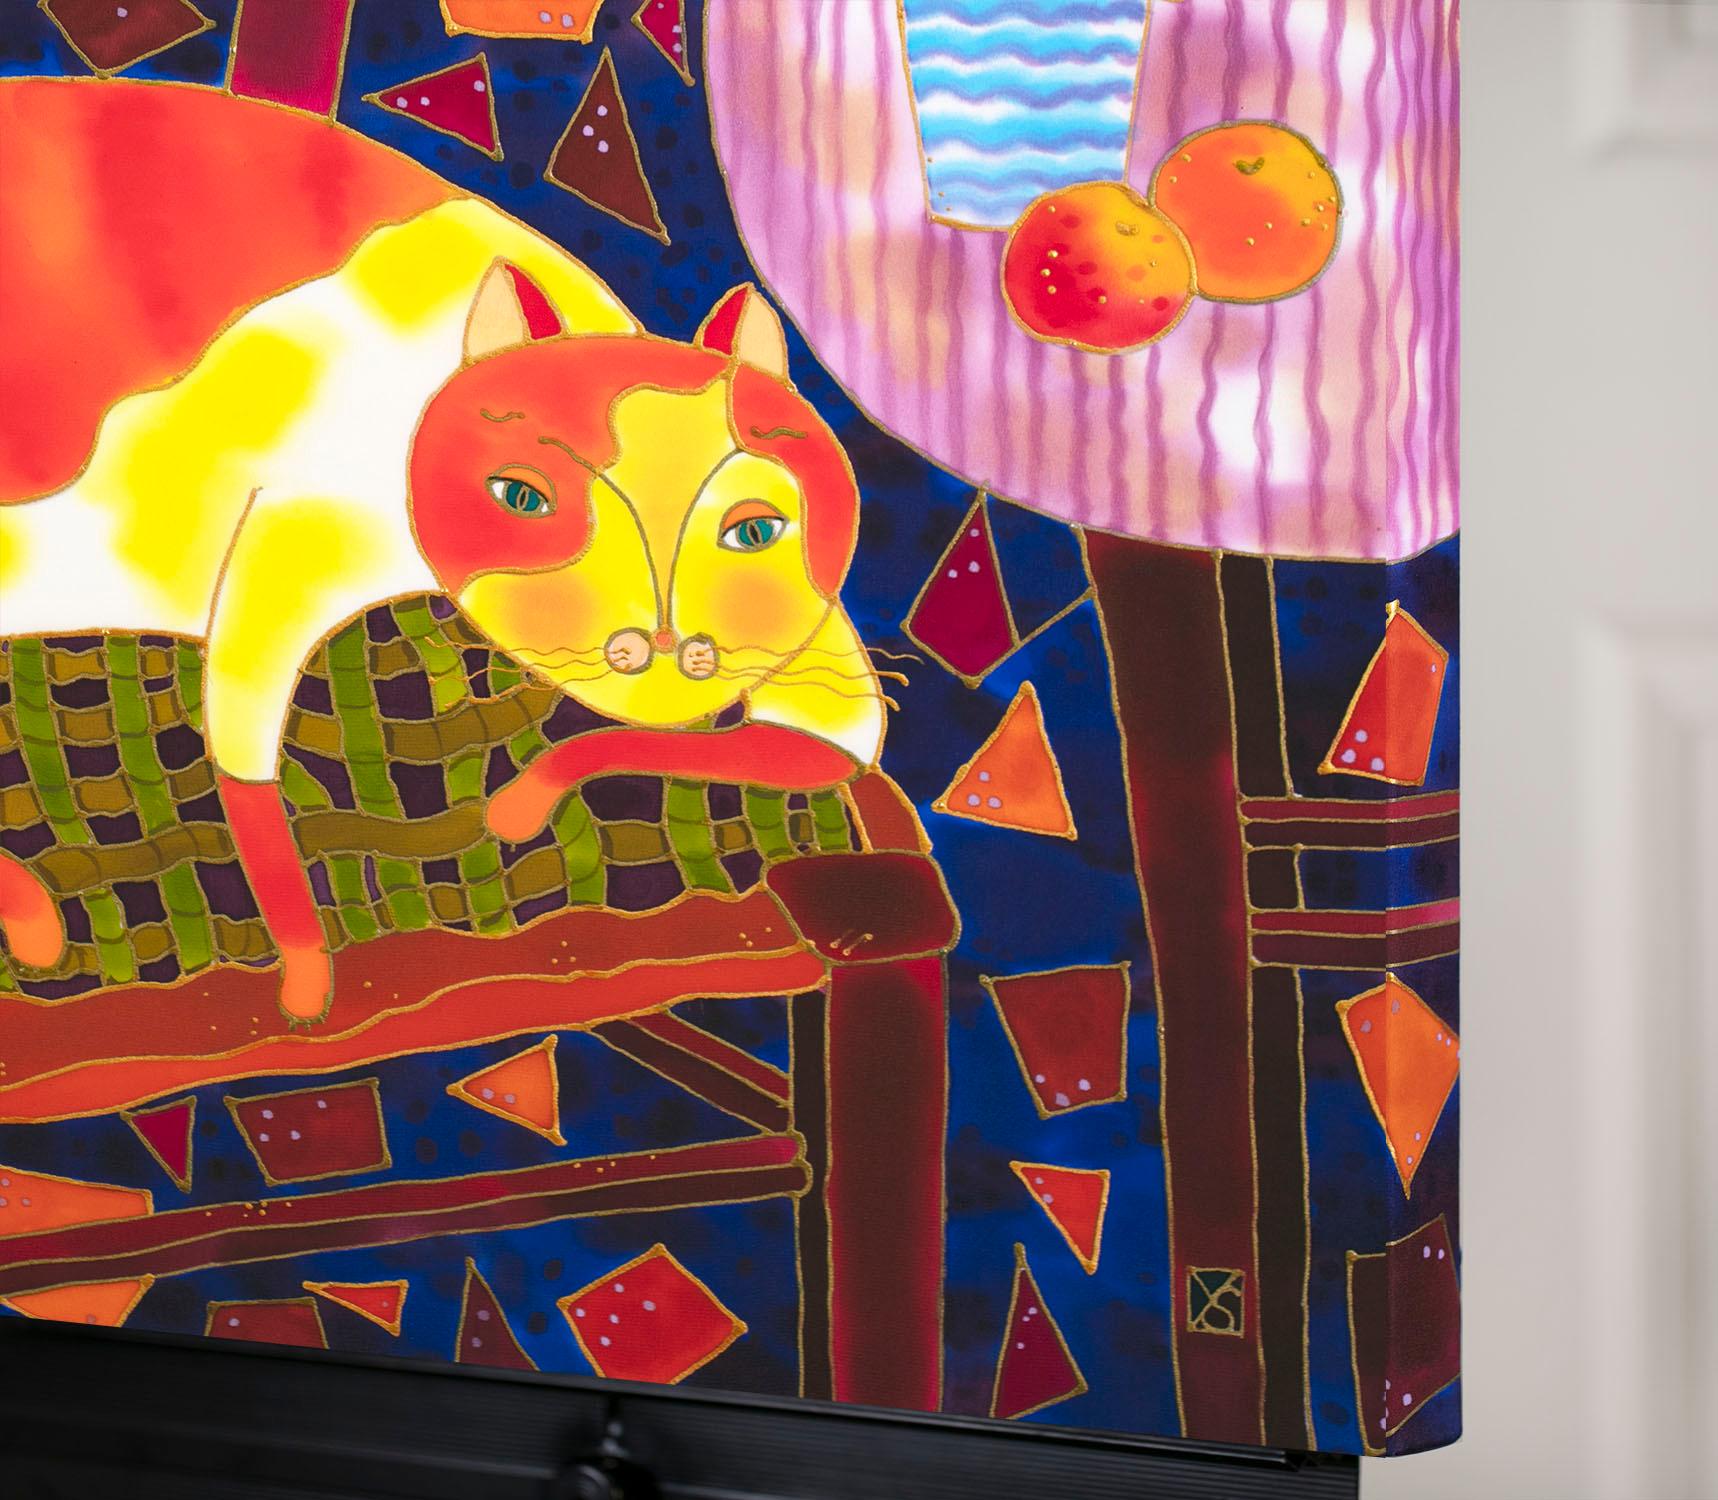 Ginger Cat, Original Painting - Contemporary Mixed Media Art by Yelena Sidorova